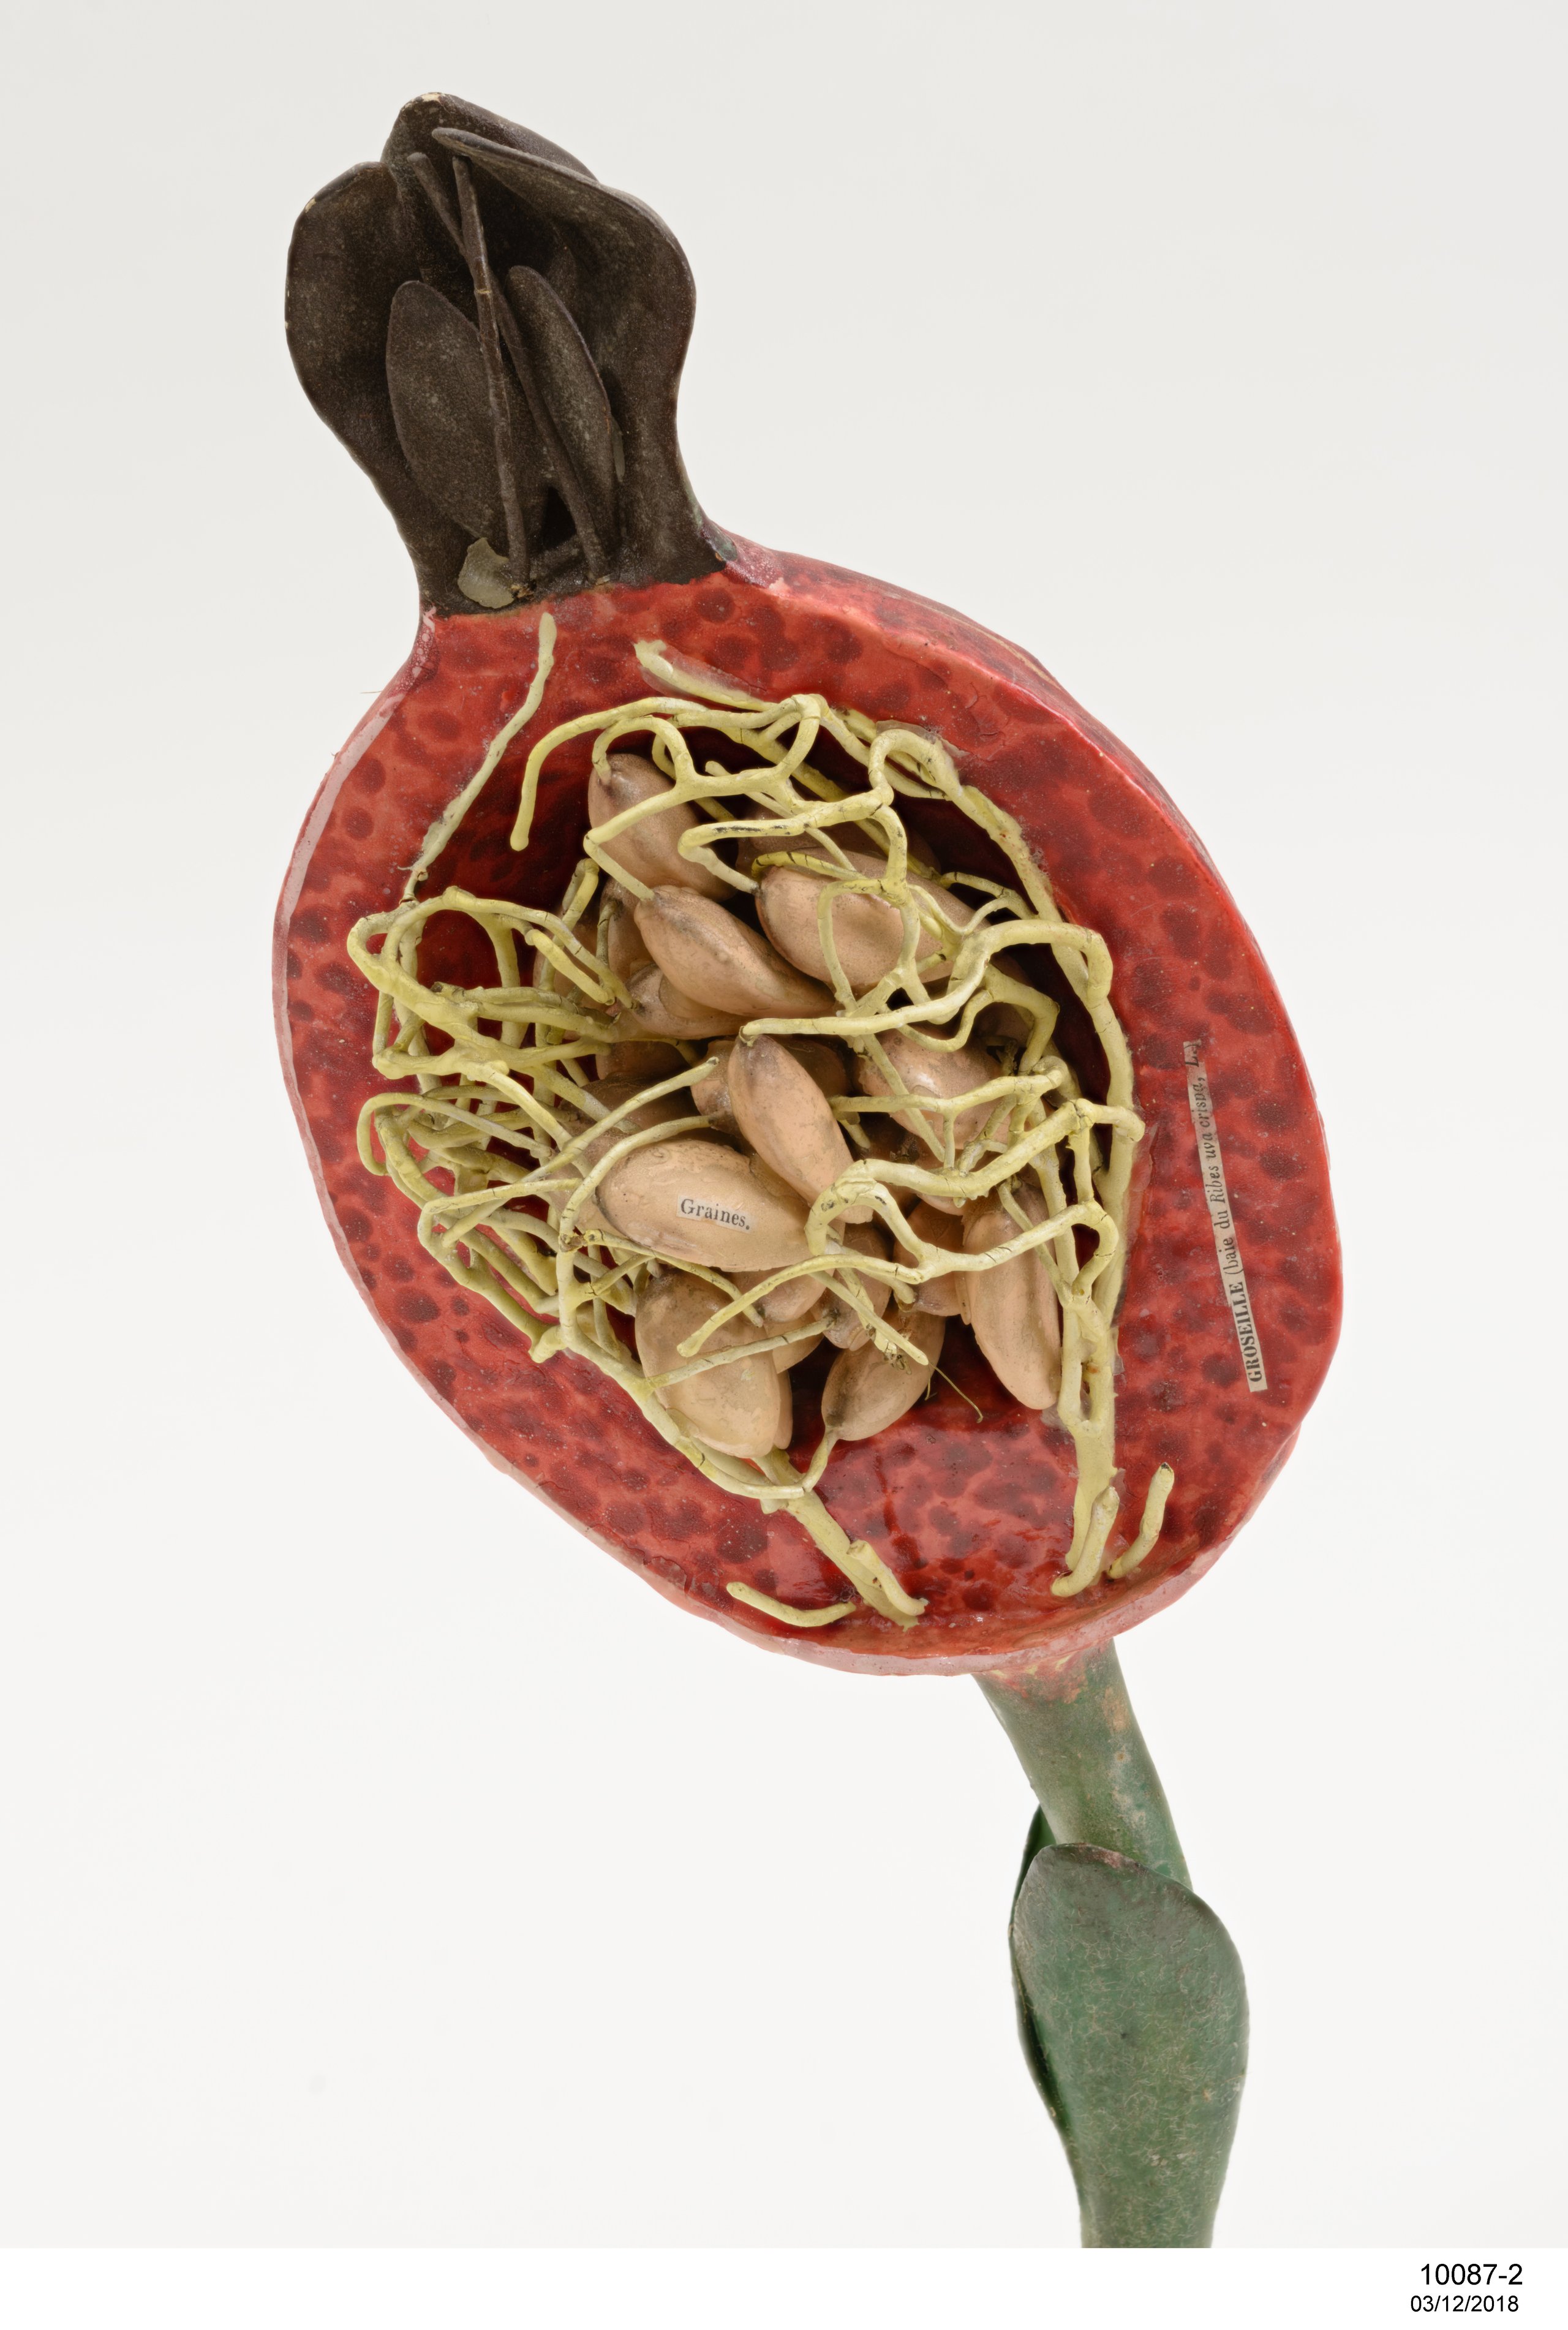 Botanical model of Henbane fruit